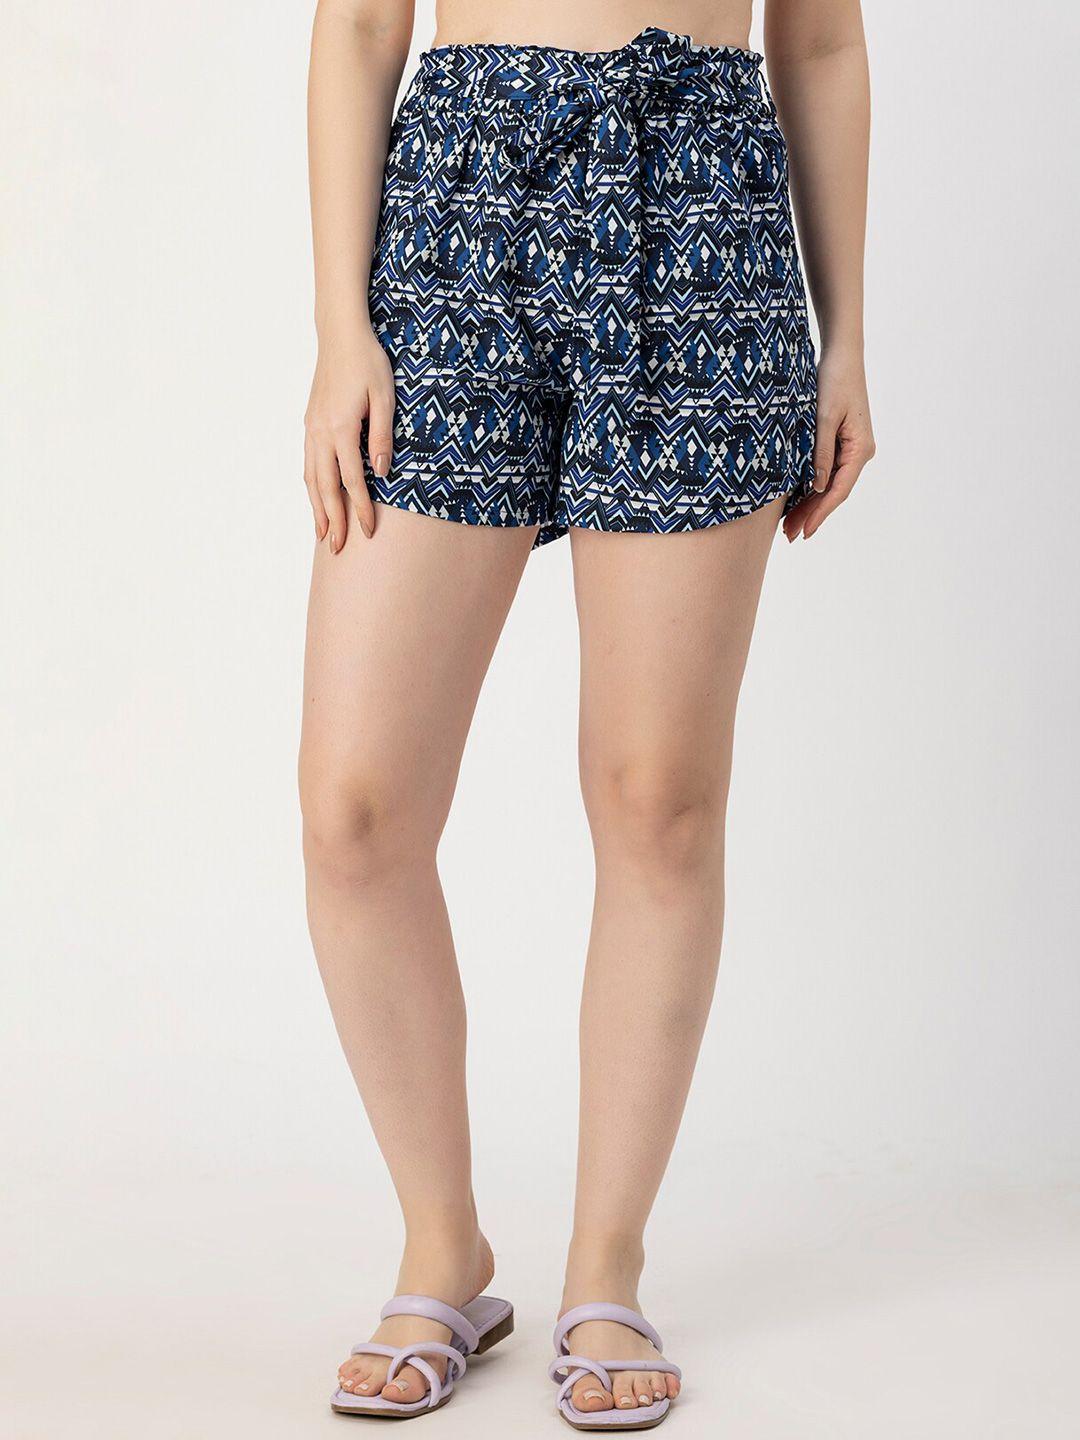 moomaya women floral printed high-rise shorts